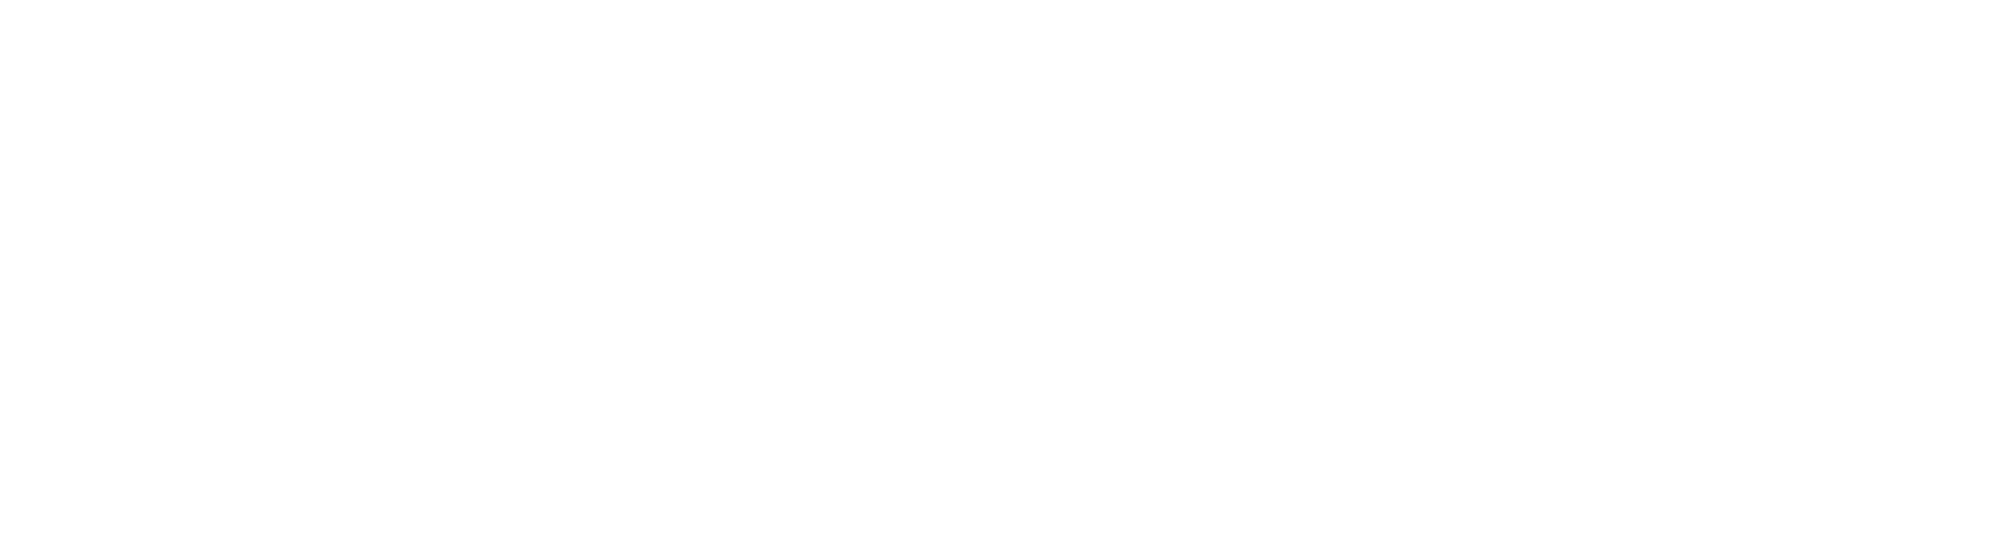 Tech Today News